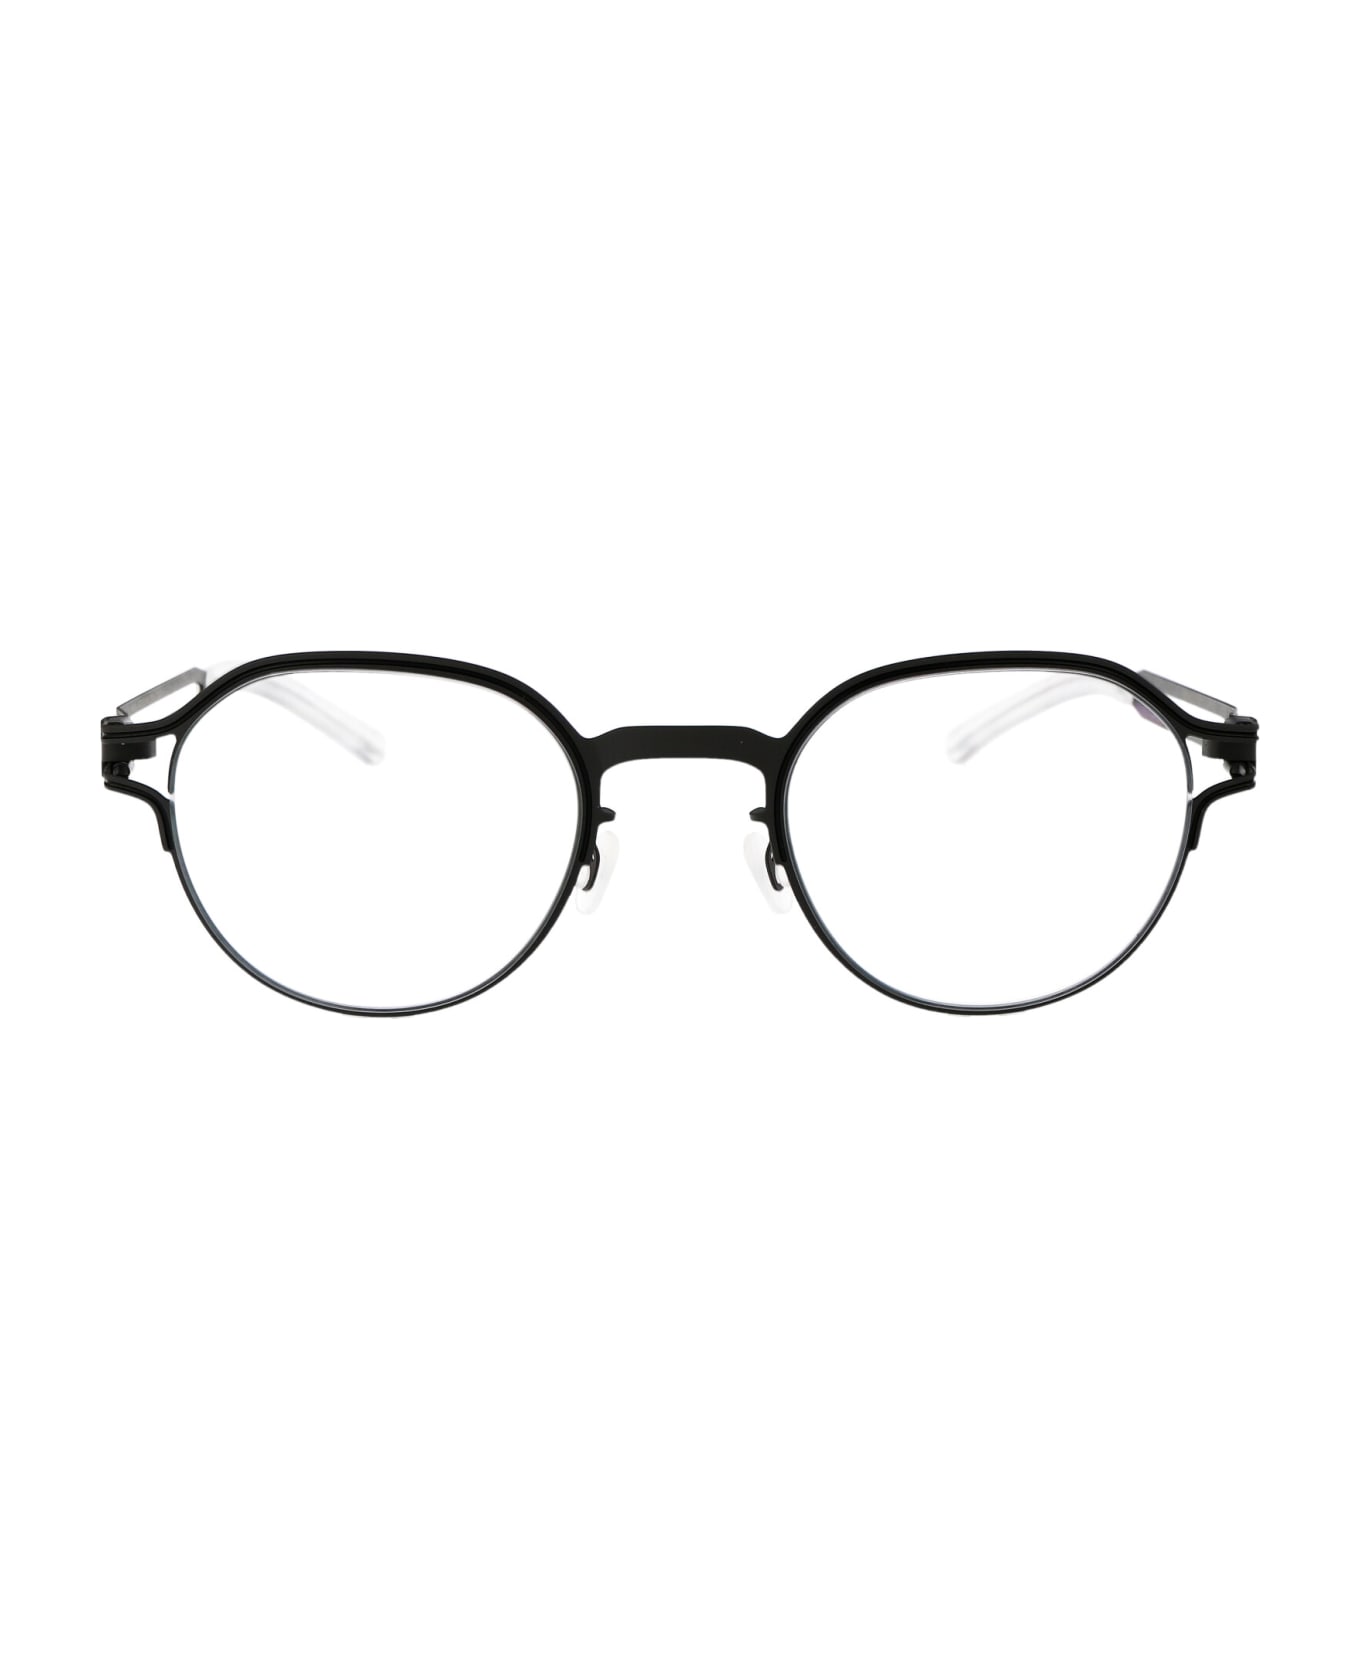 Mykita Vaasa Glasses - 515 Storm Grey/Black Clear アイウェア